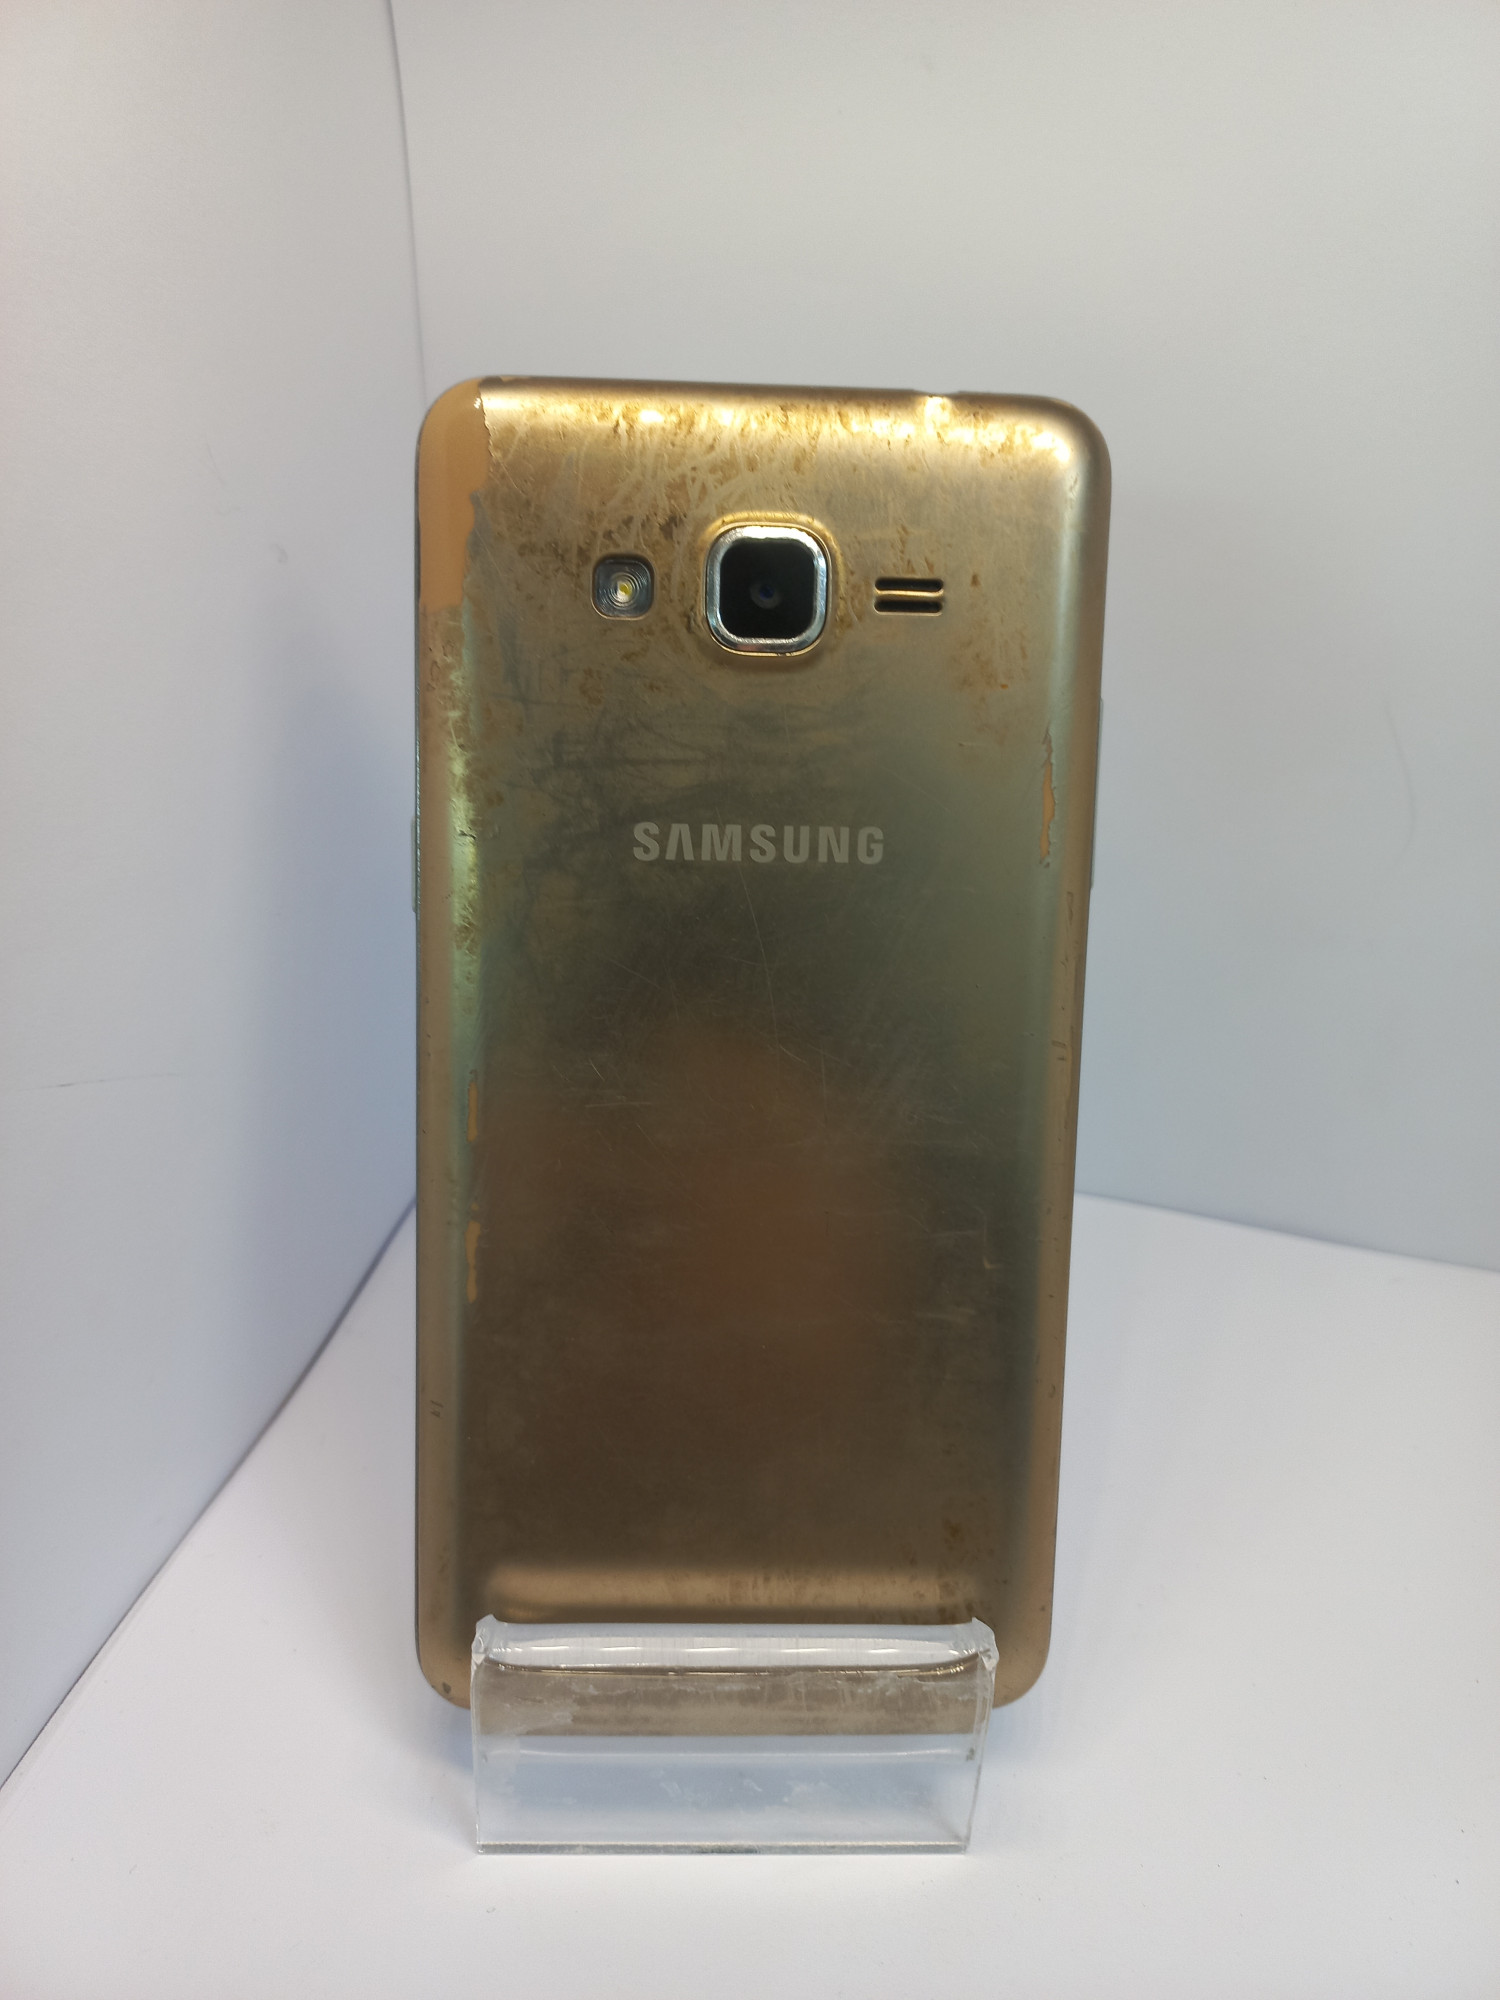 Samsung Galaxy Grand Prime VE (SM-G531H) 1/8Gb 1